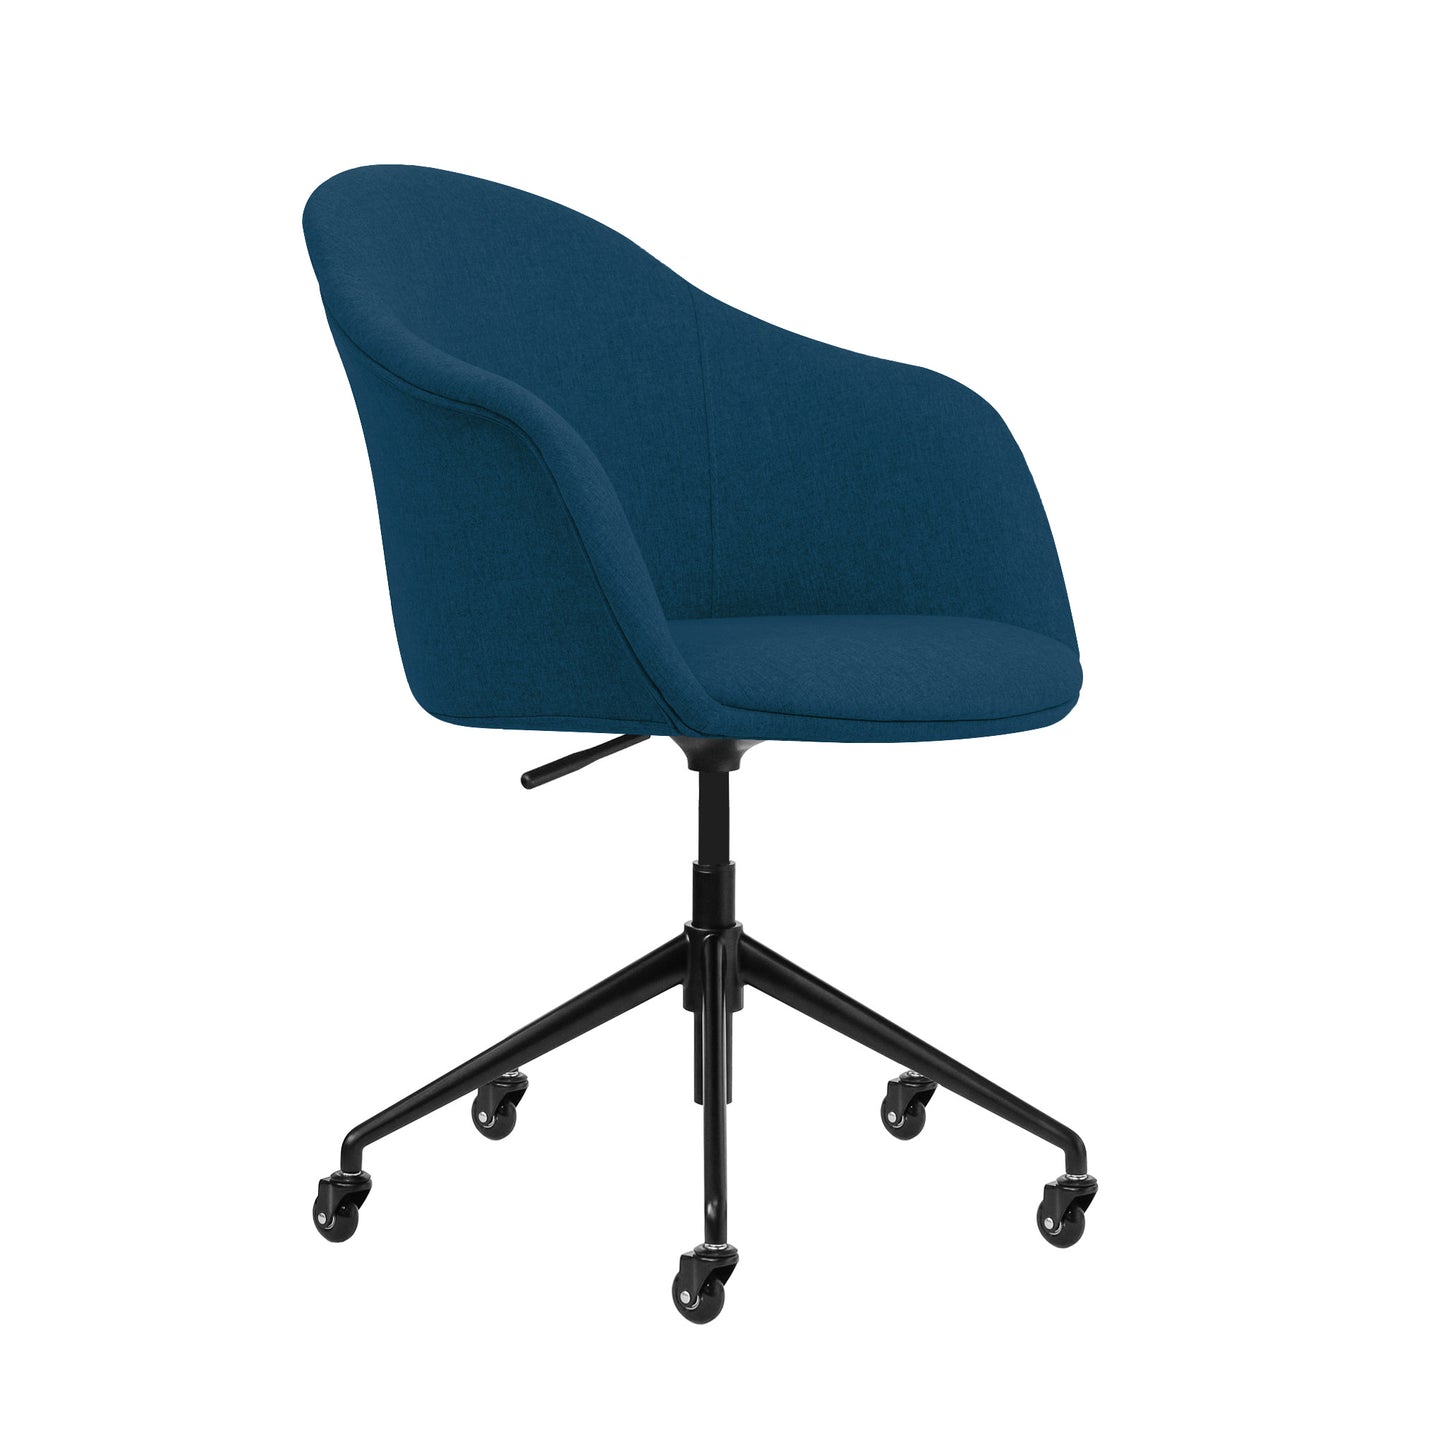 SHIPS JUNE 10TH - Astoria II Office Chair (Dark Blue)